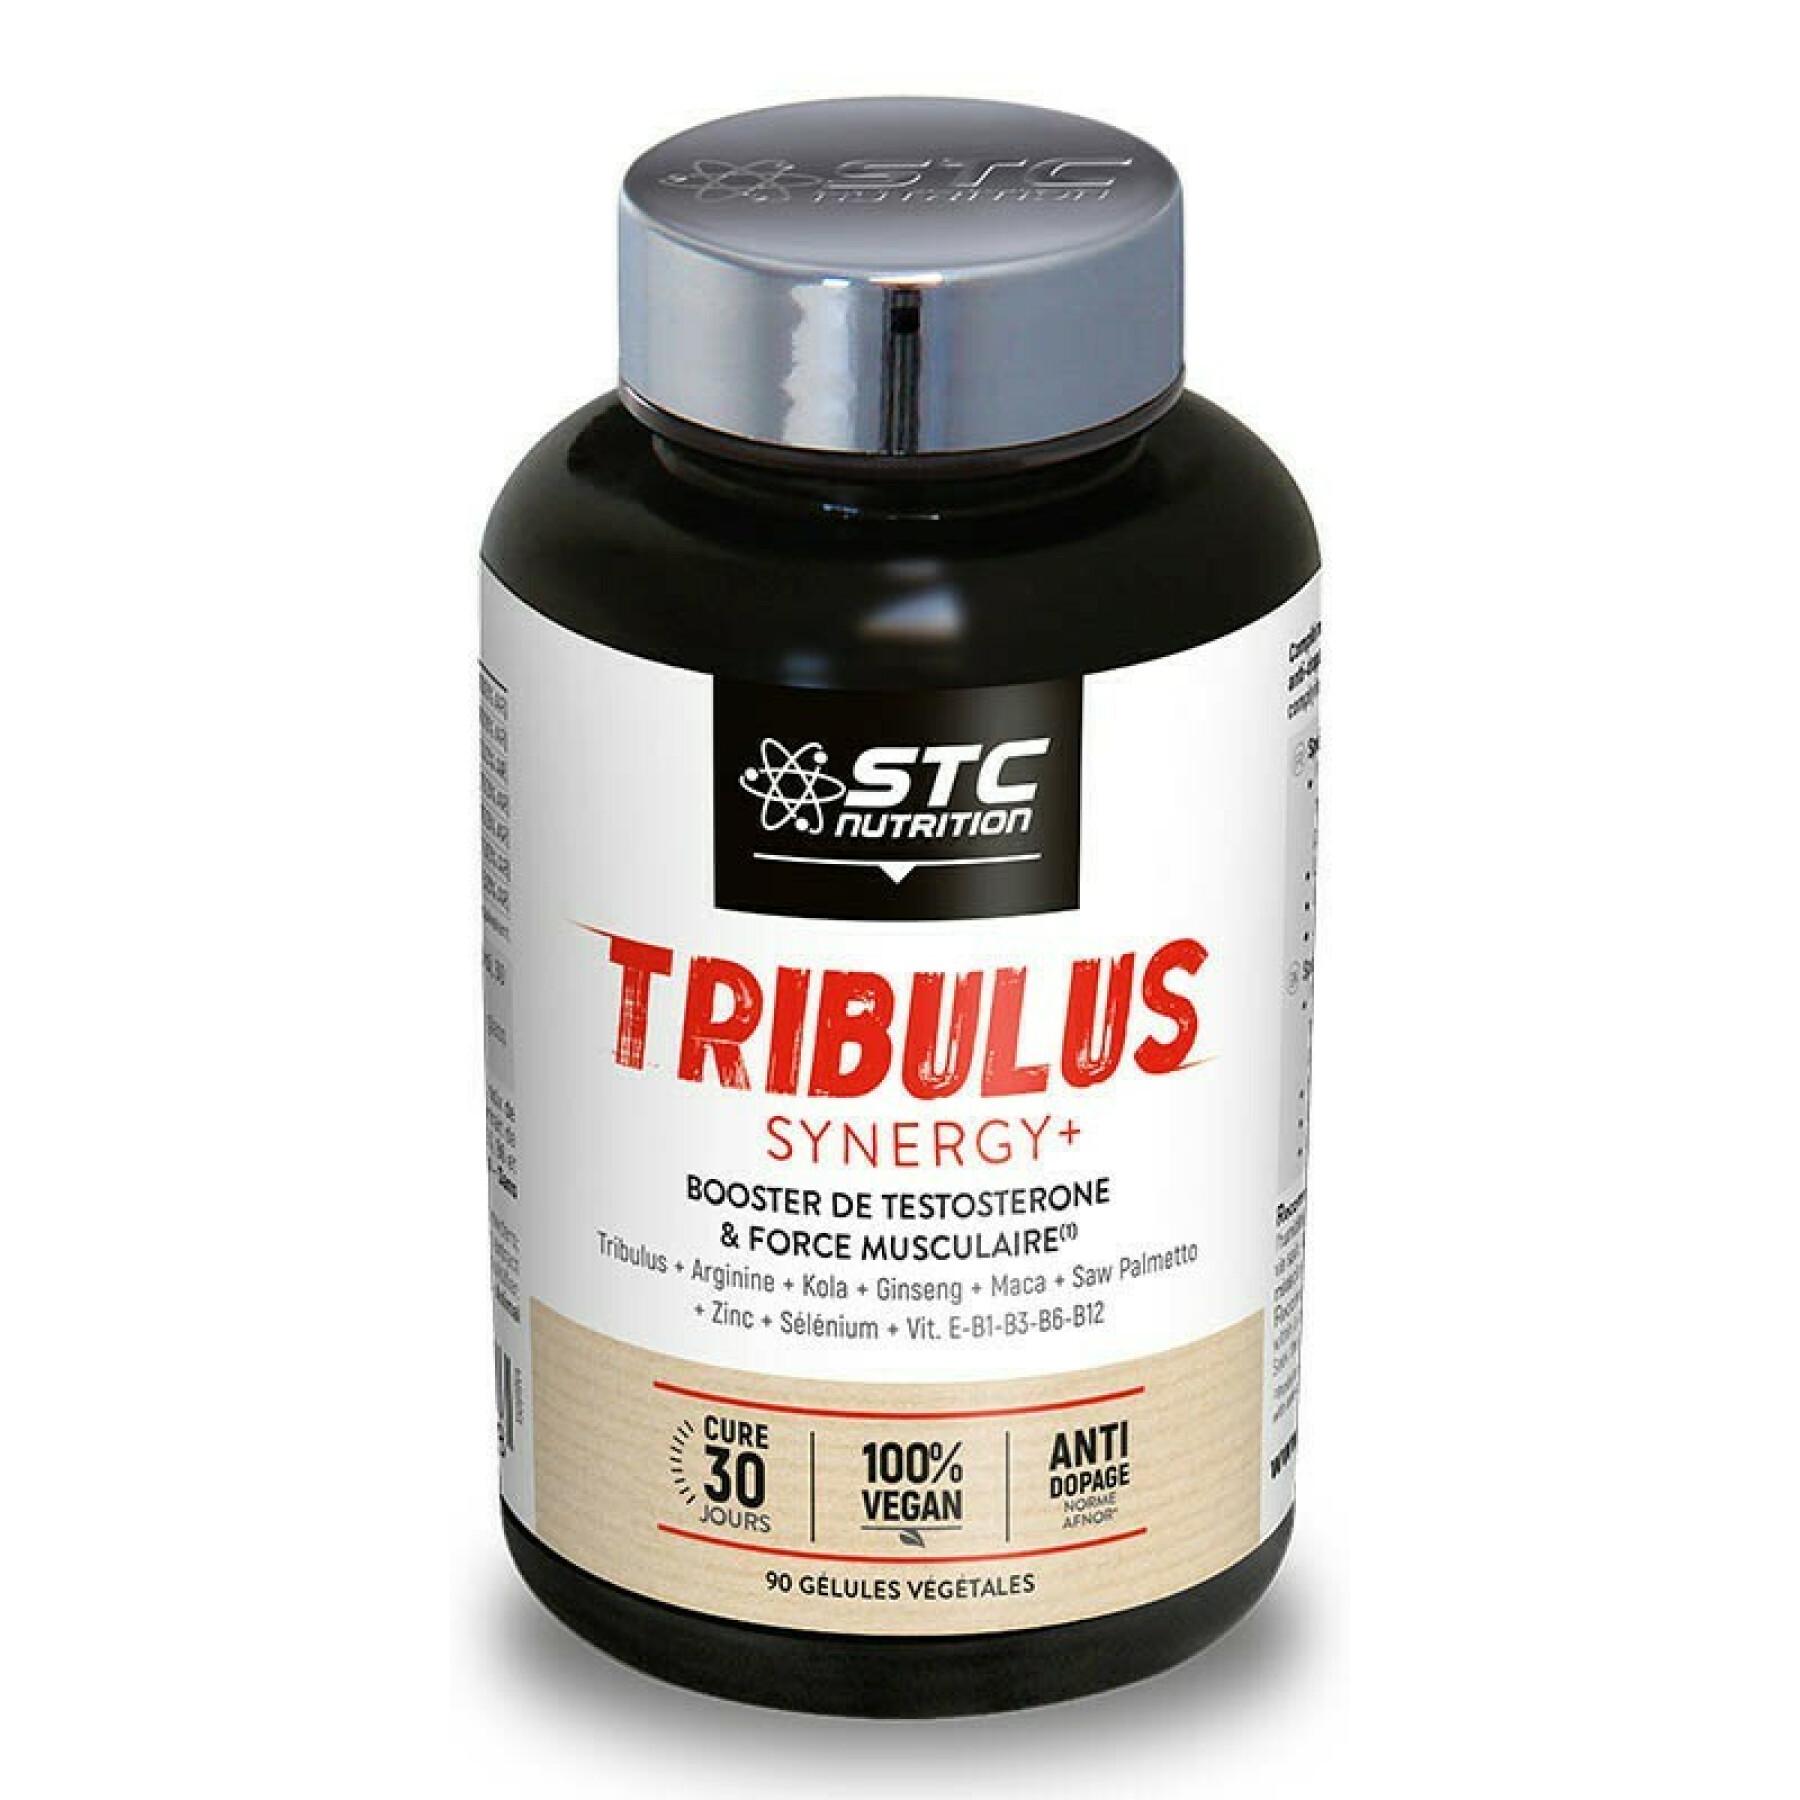 Testosterone booster & muscle strength tribulus synergy+ STC Nutrition - 90 gélules végétales